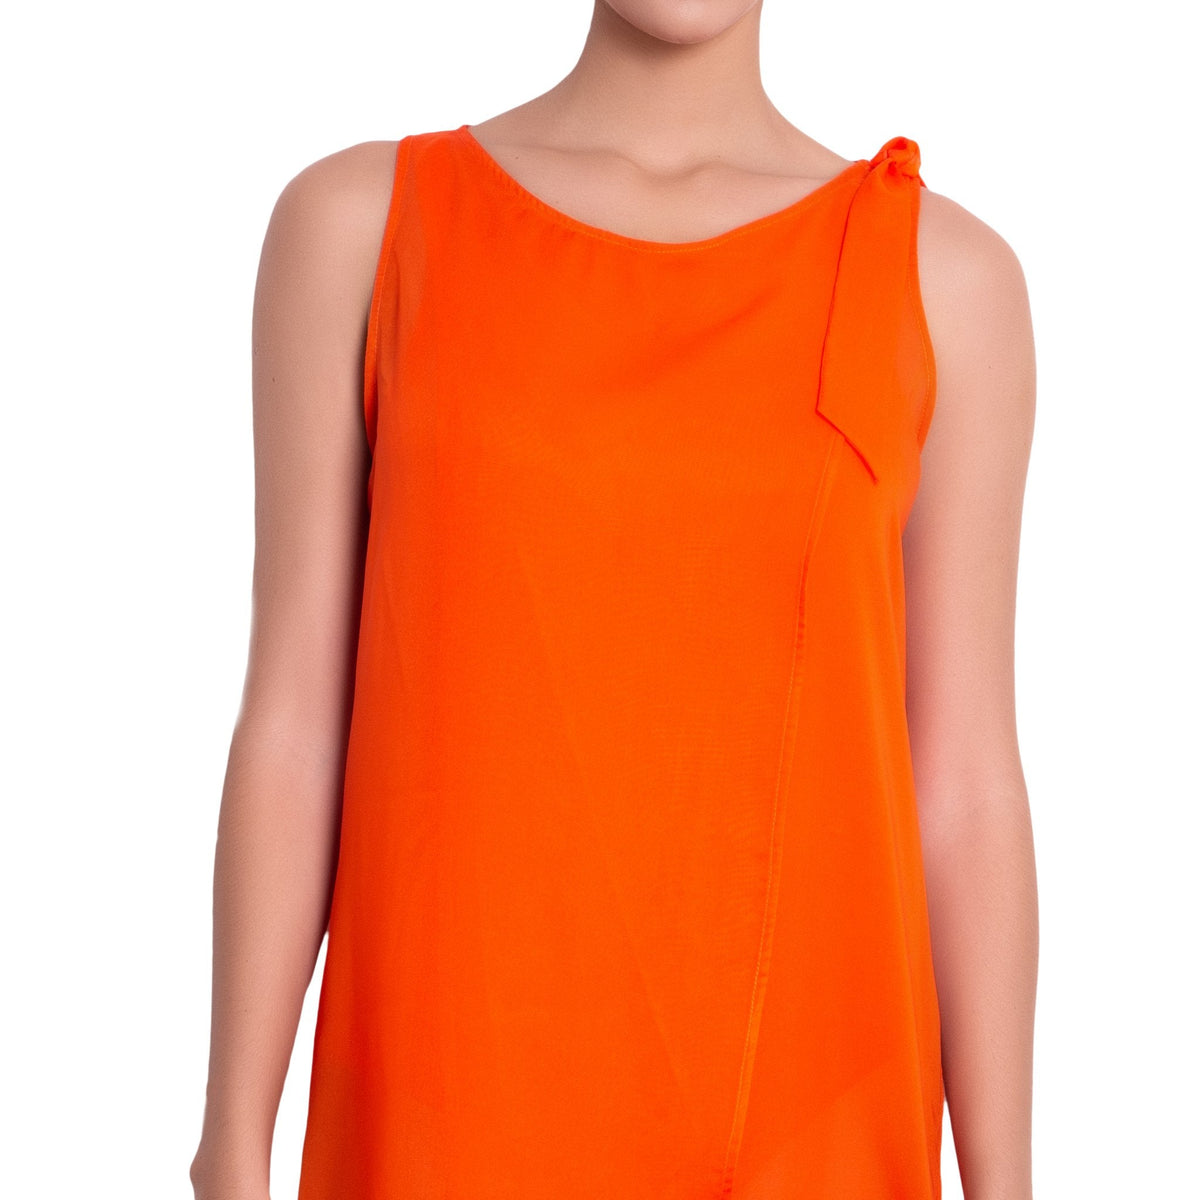 EVA crossed dress, orange chiffon cover up by ALMA swimwear ‚Äì front view 1